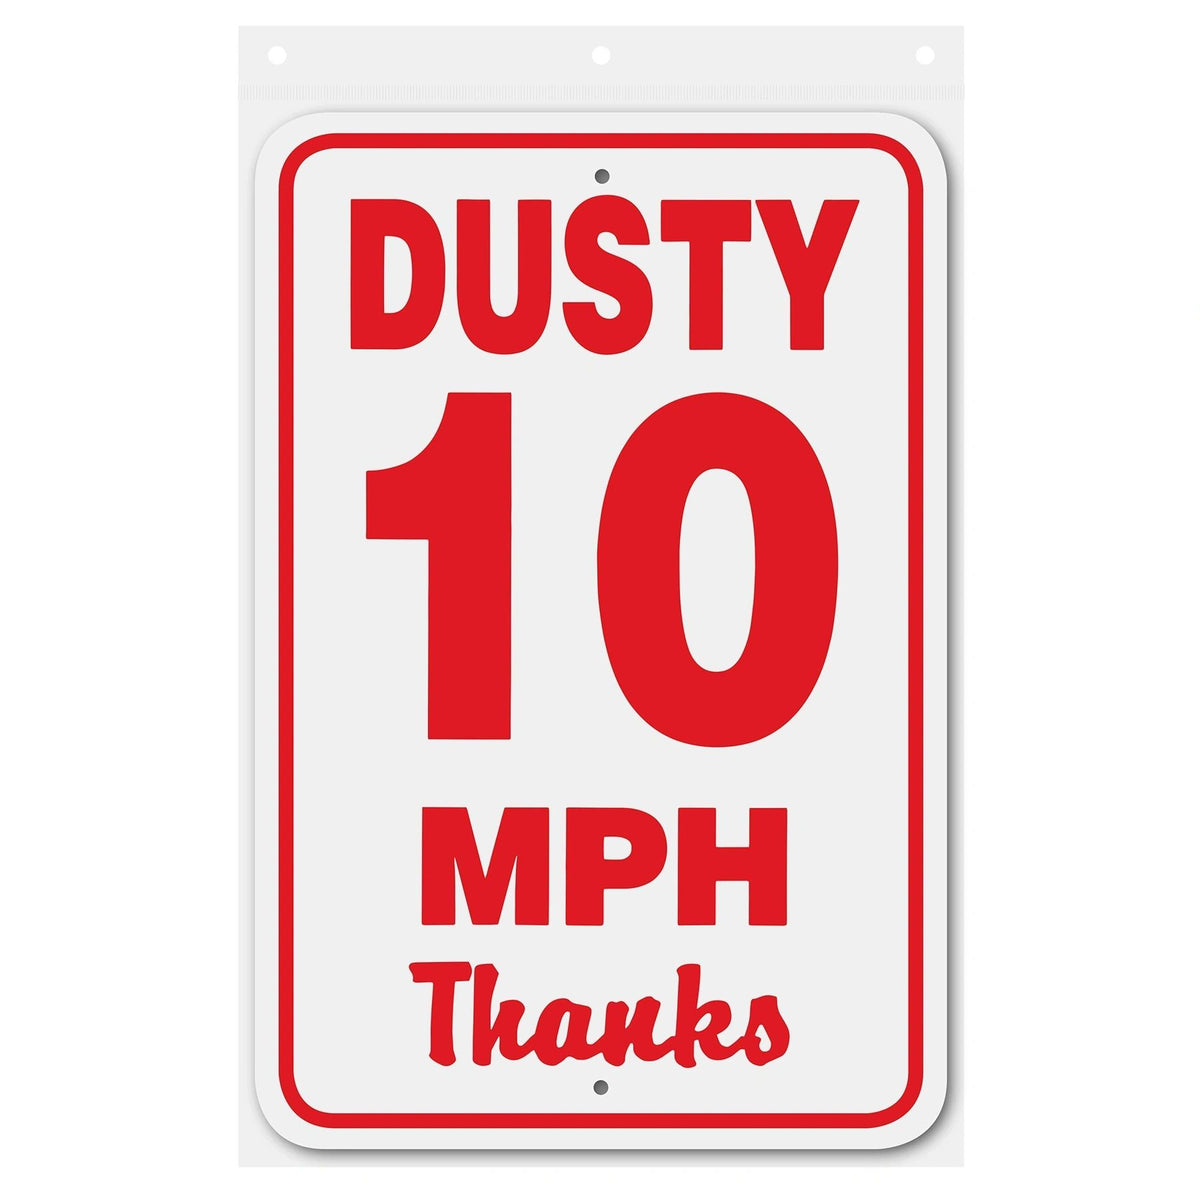 10 MPH (Dusty) Sign Aluminum 12 in X 18 in #146720